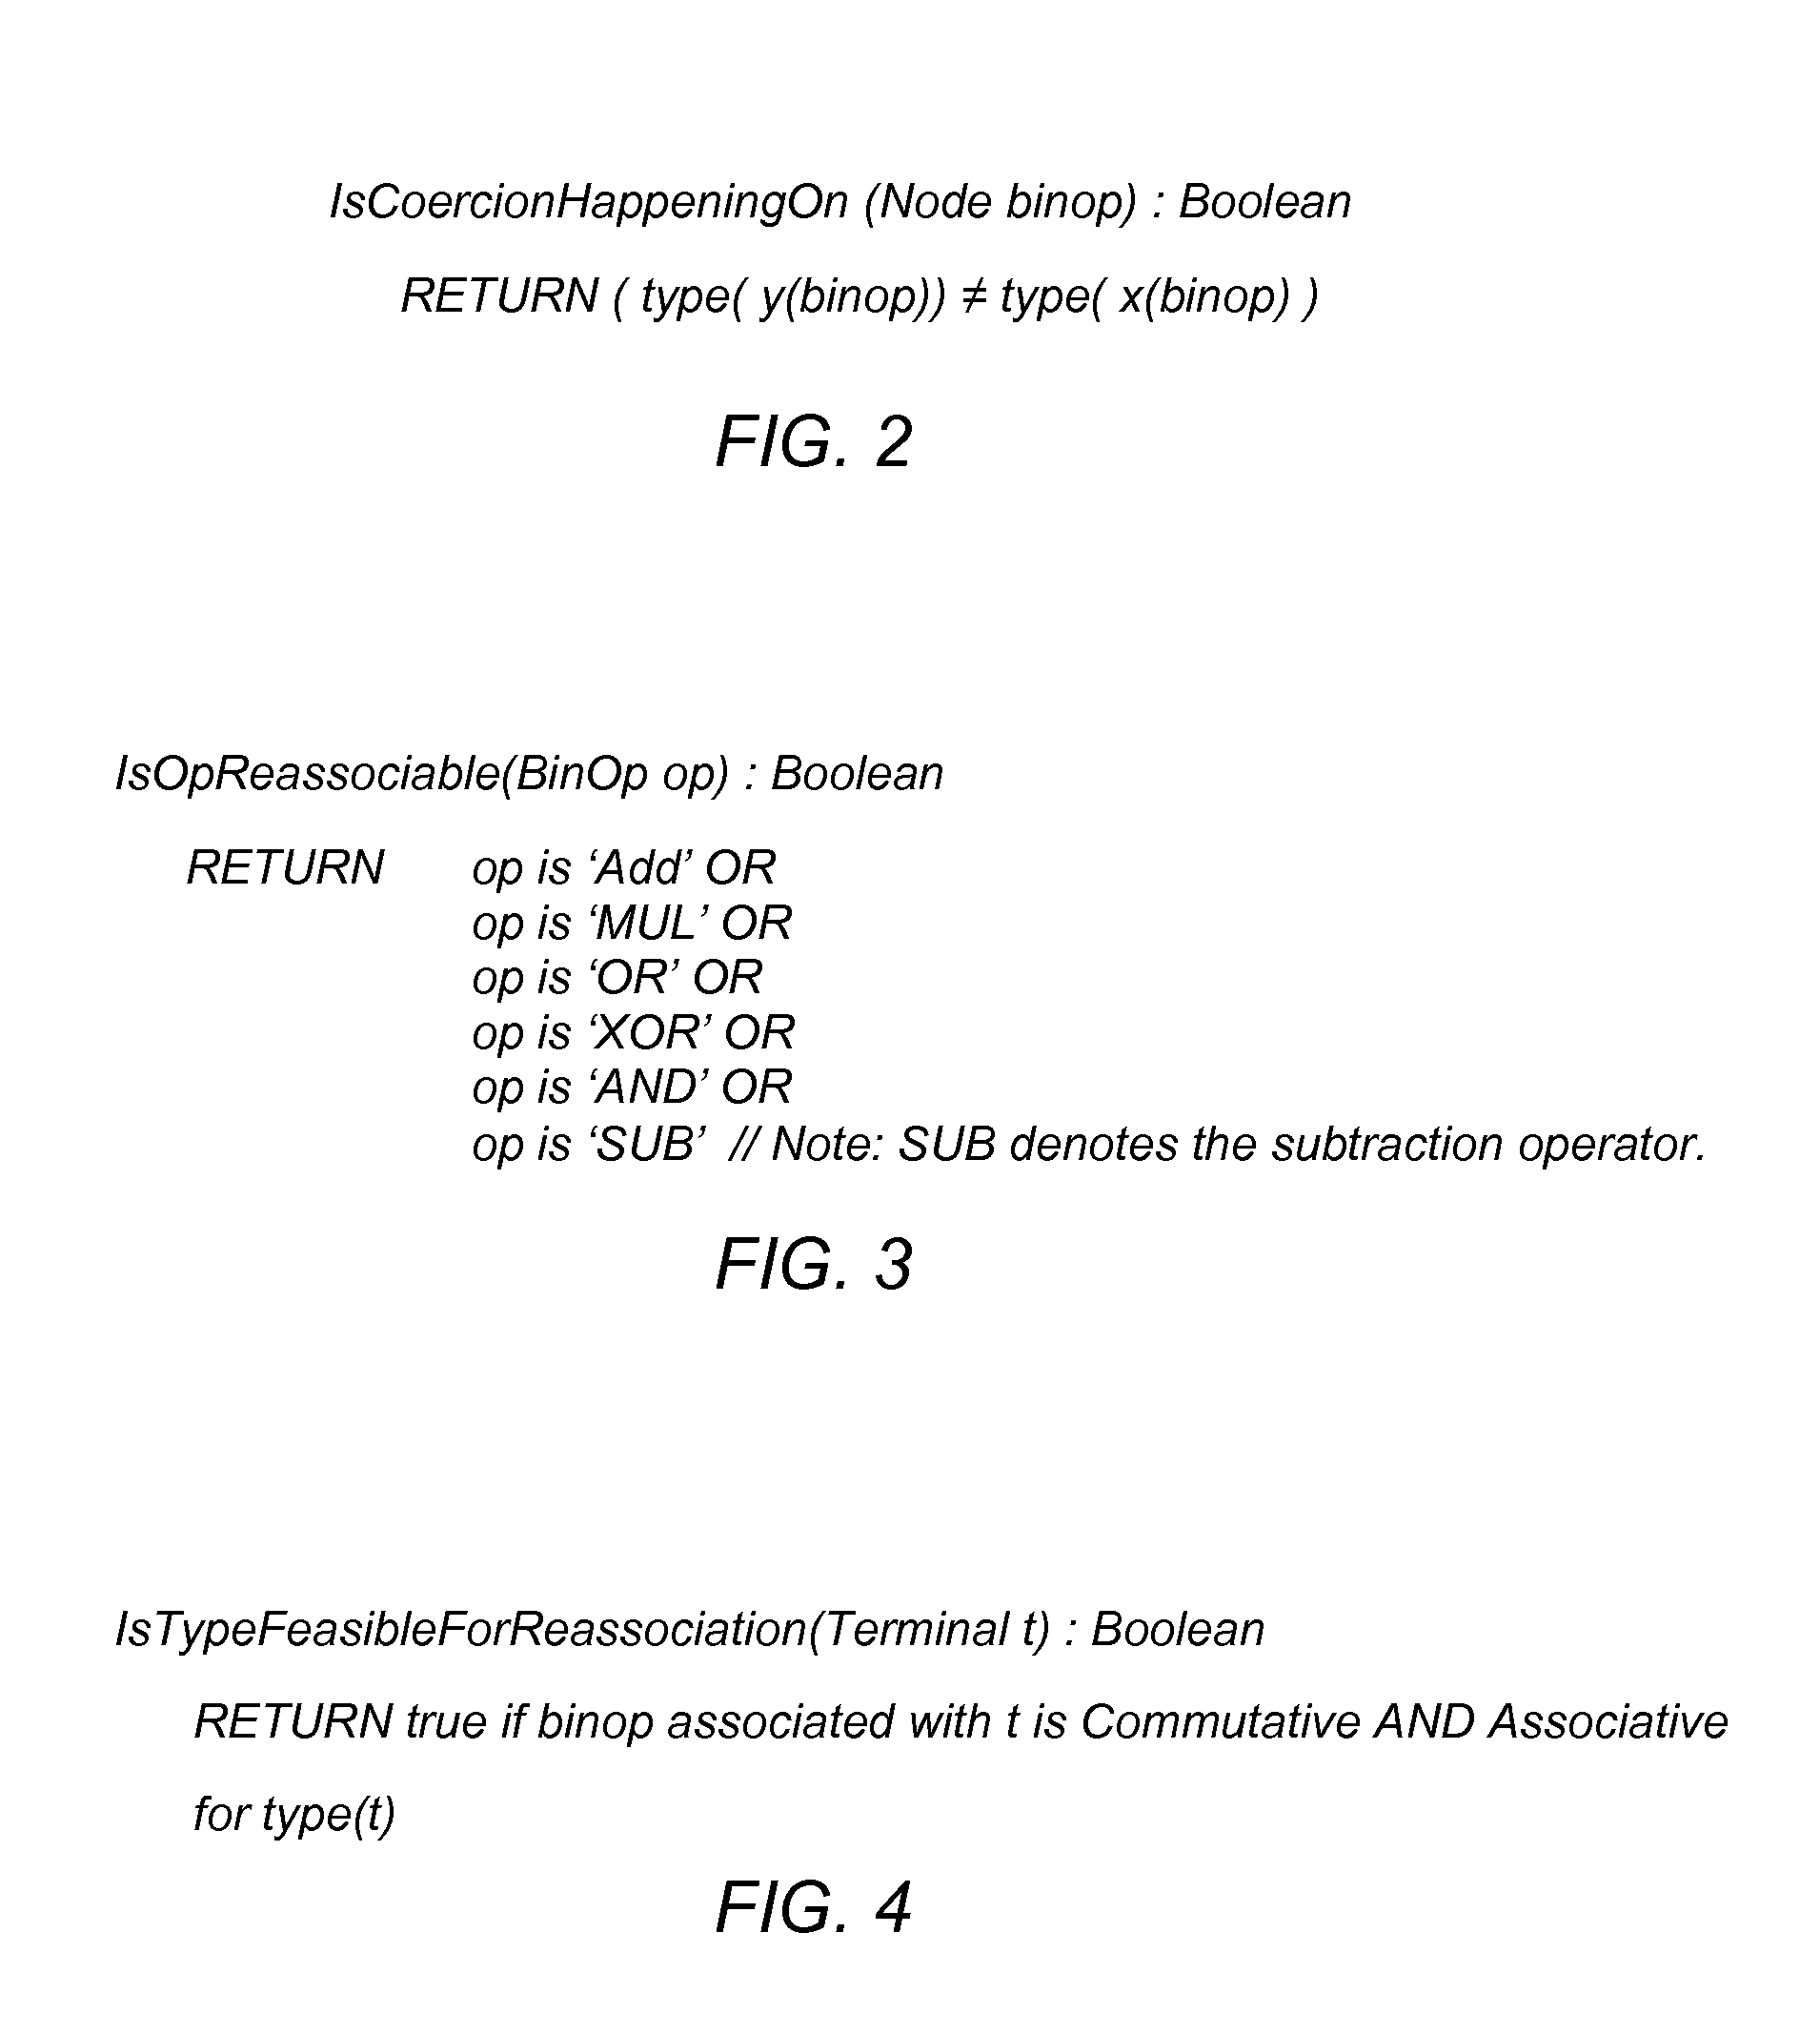 Rearrangement of algebraic expressions based on operand ranking schemes